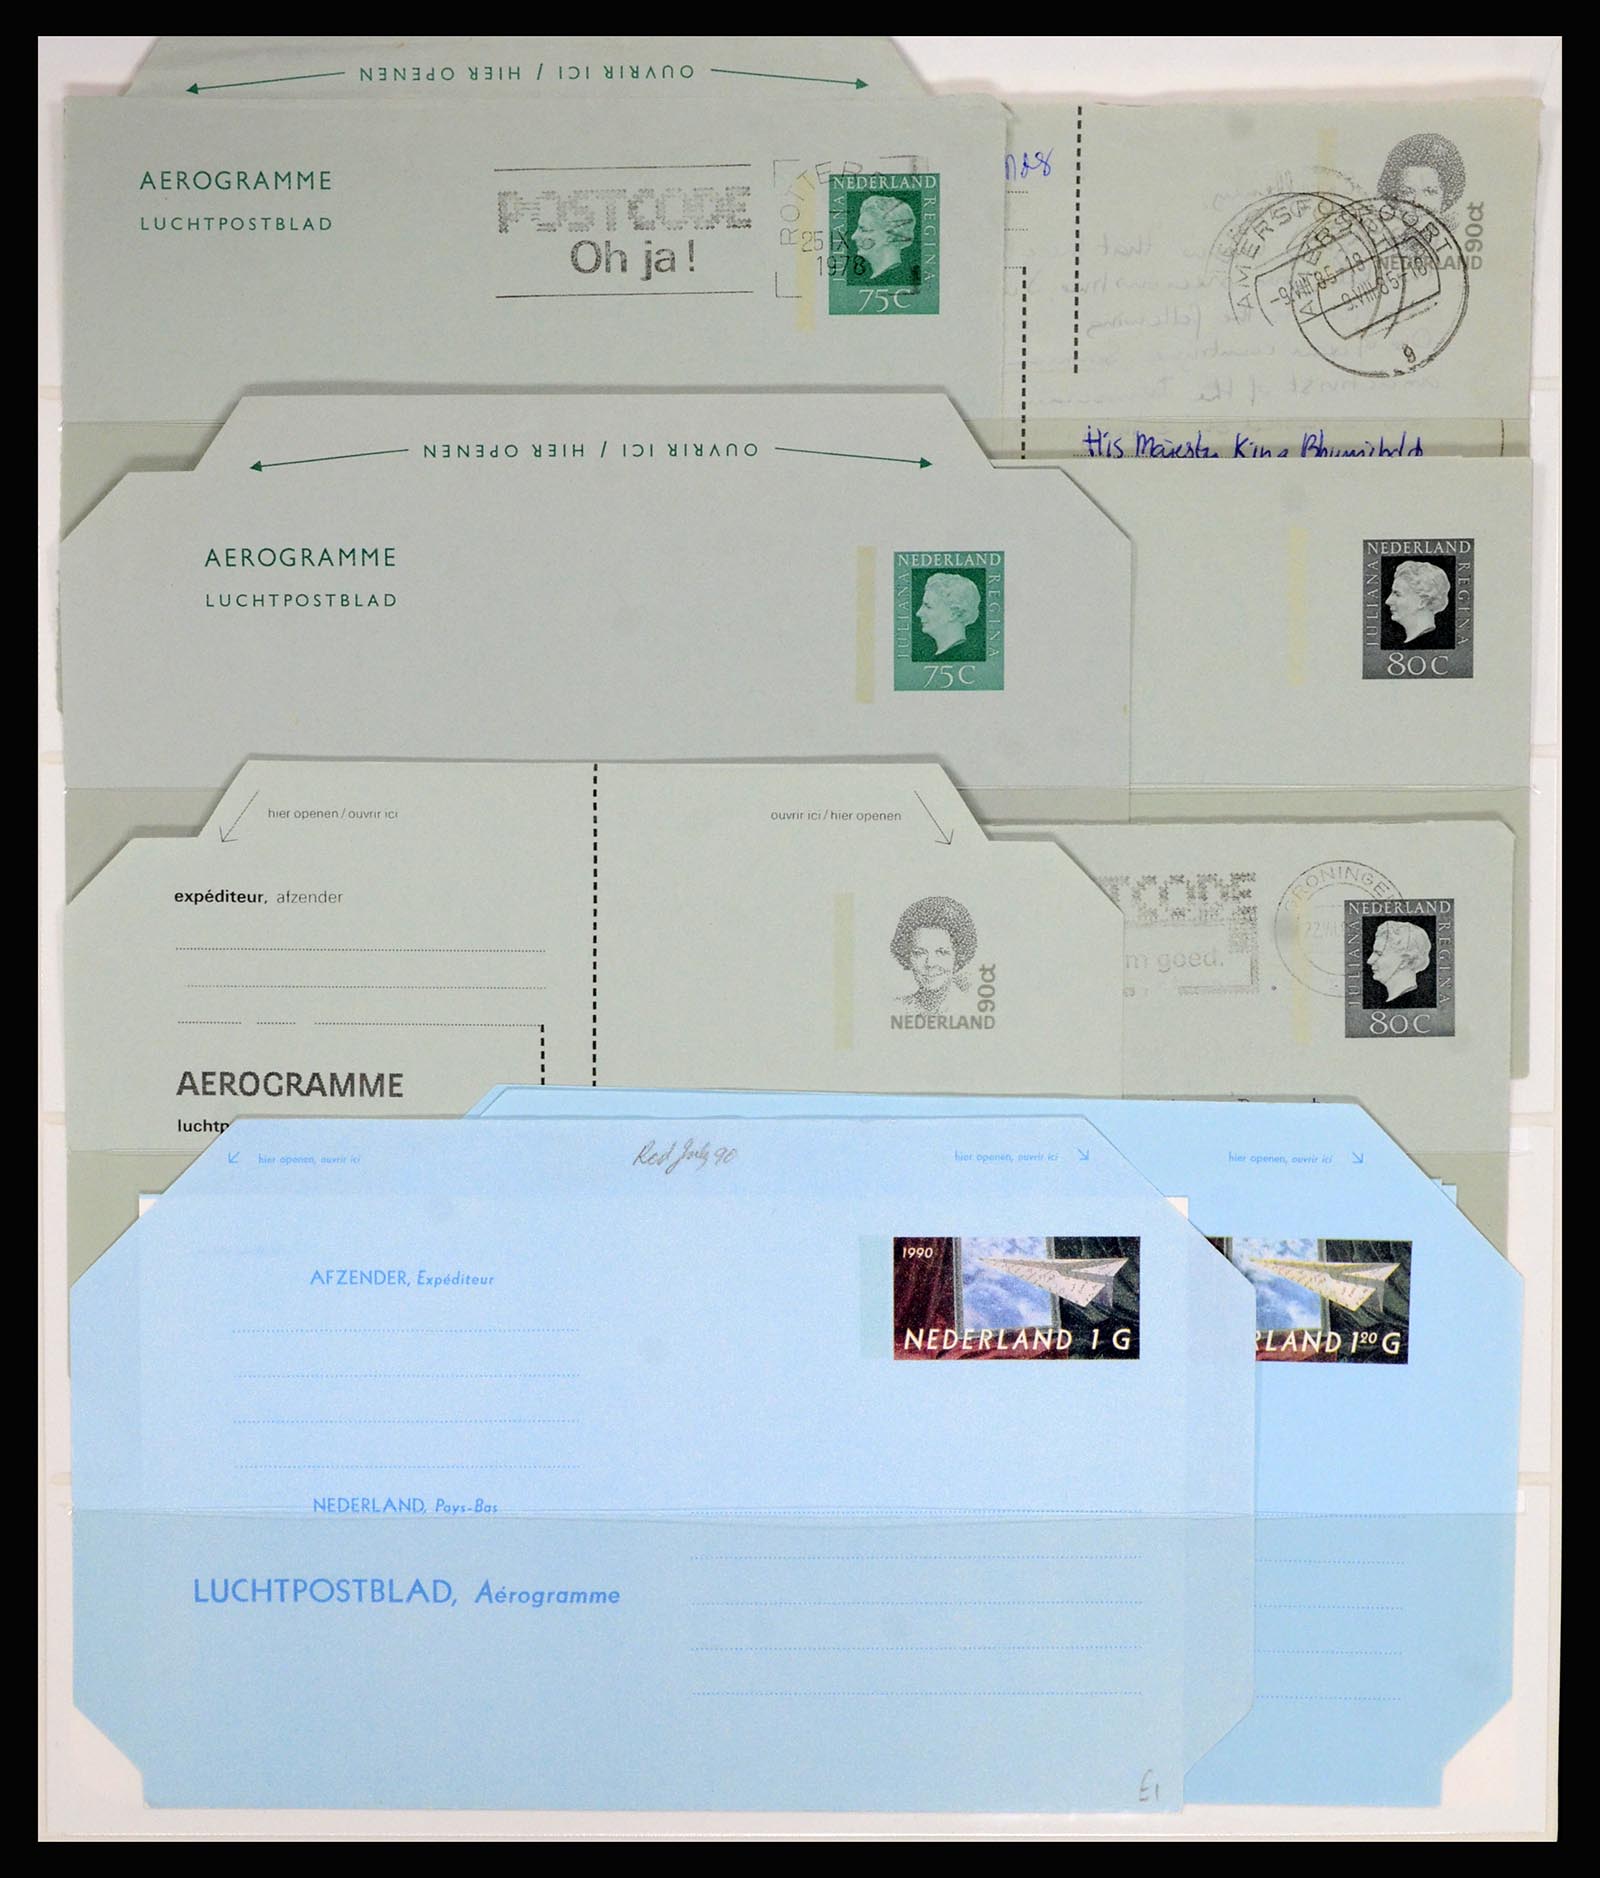 36627 077 - Stamp collection 36627 World aerograms.